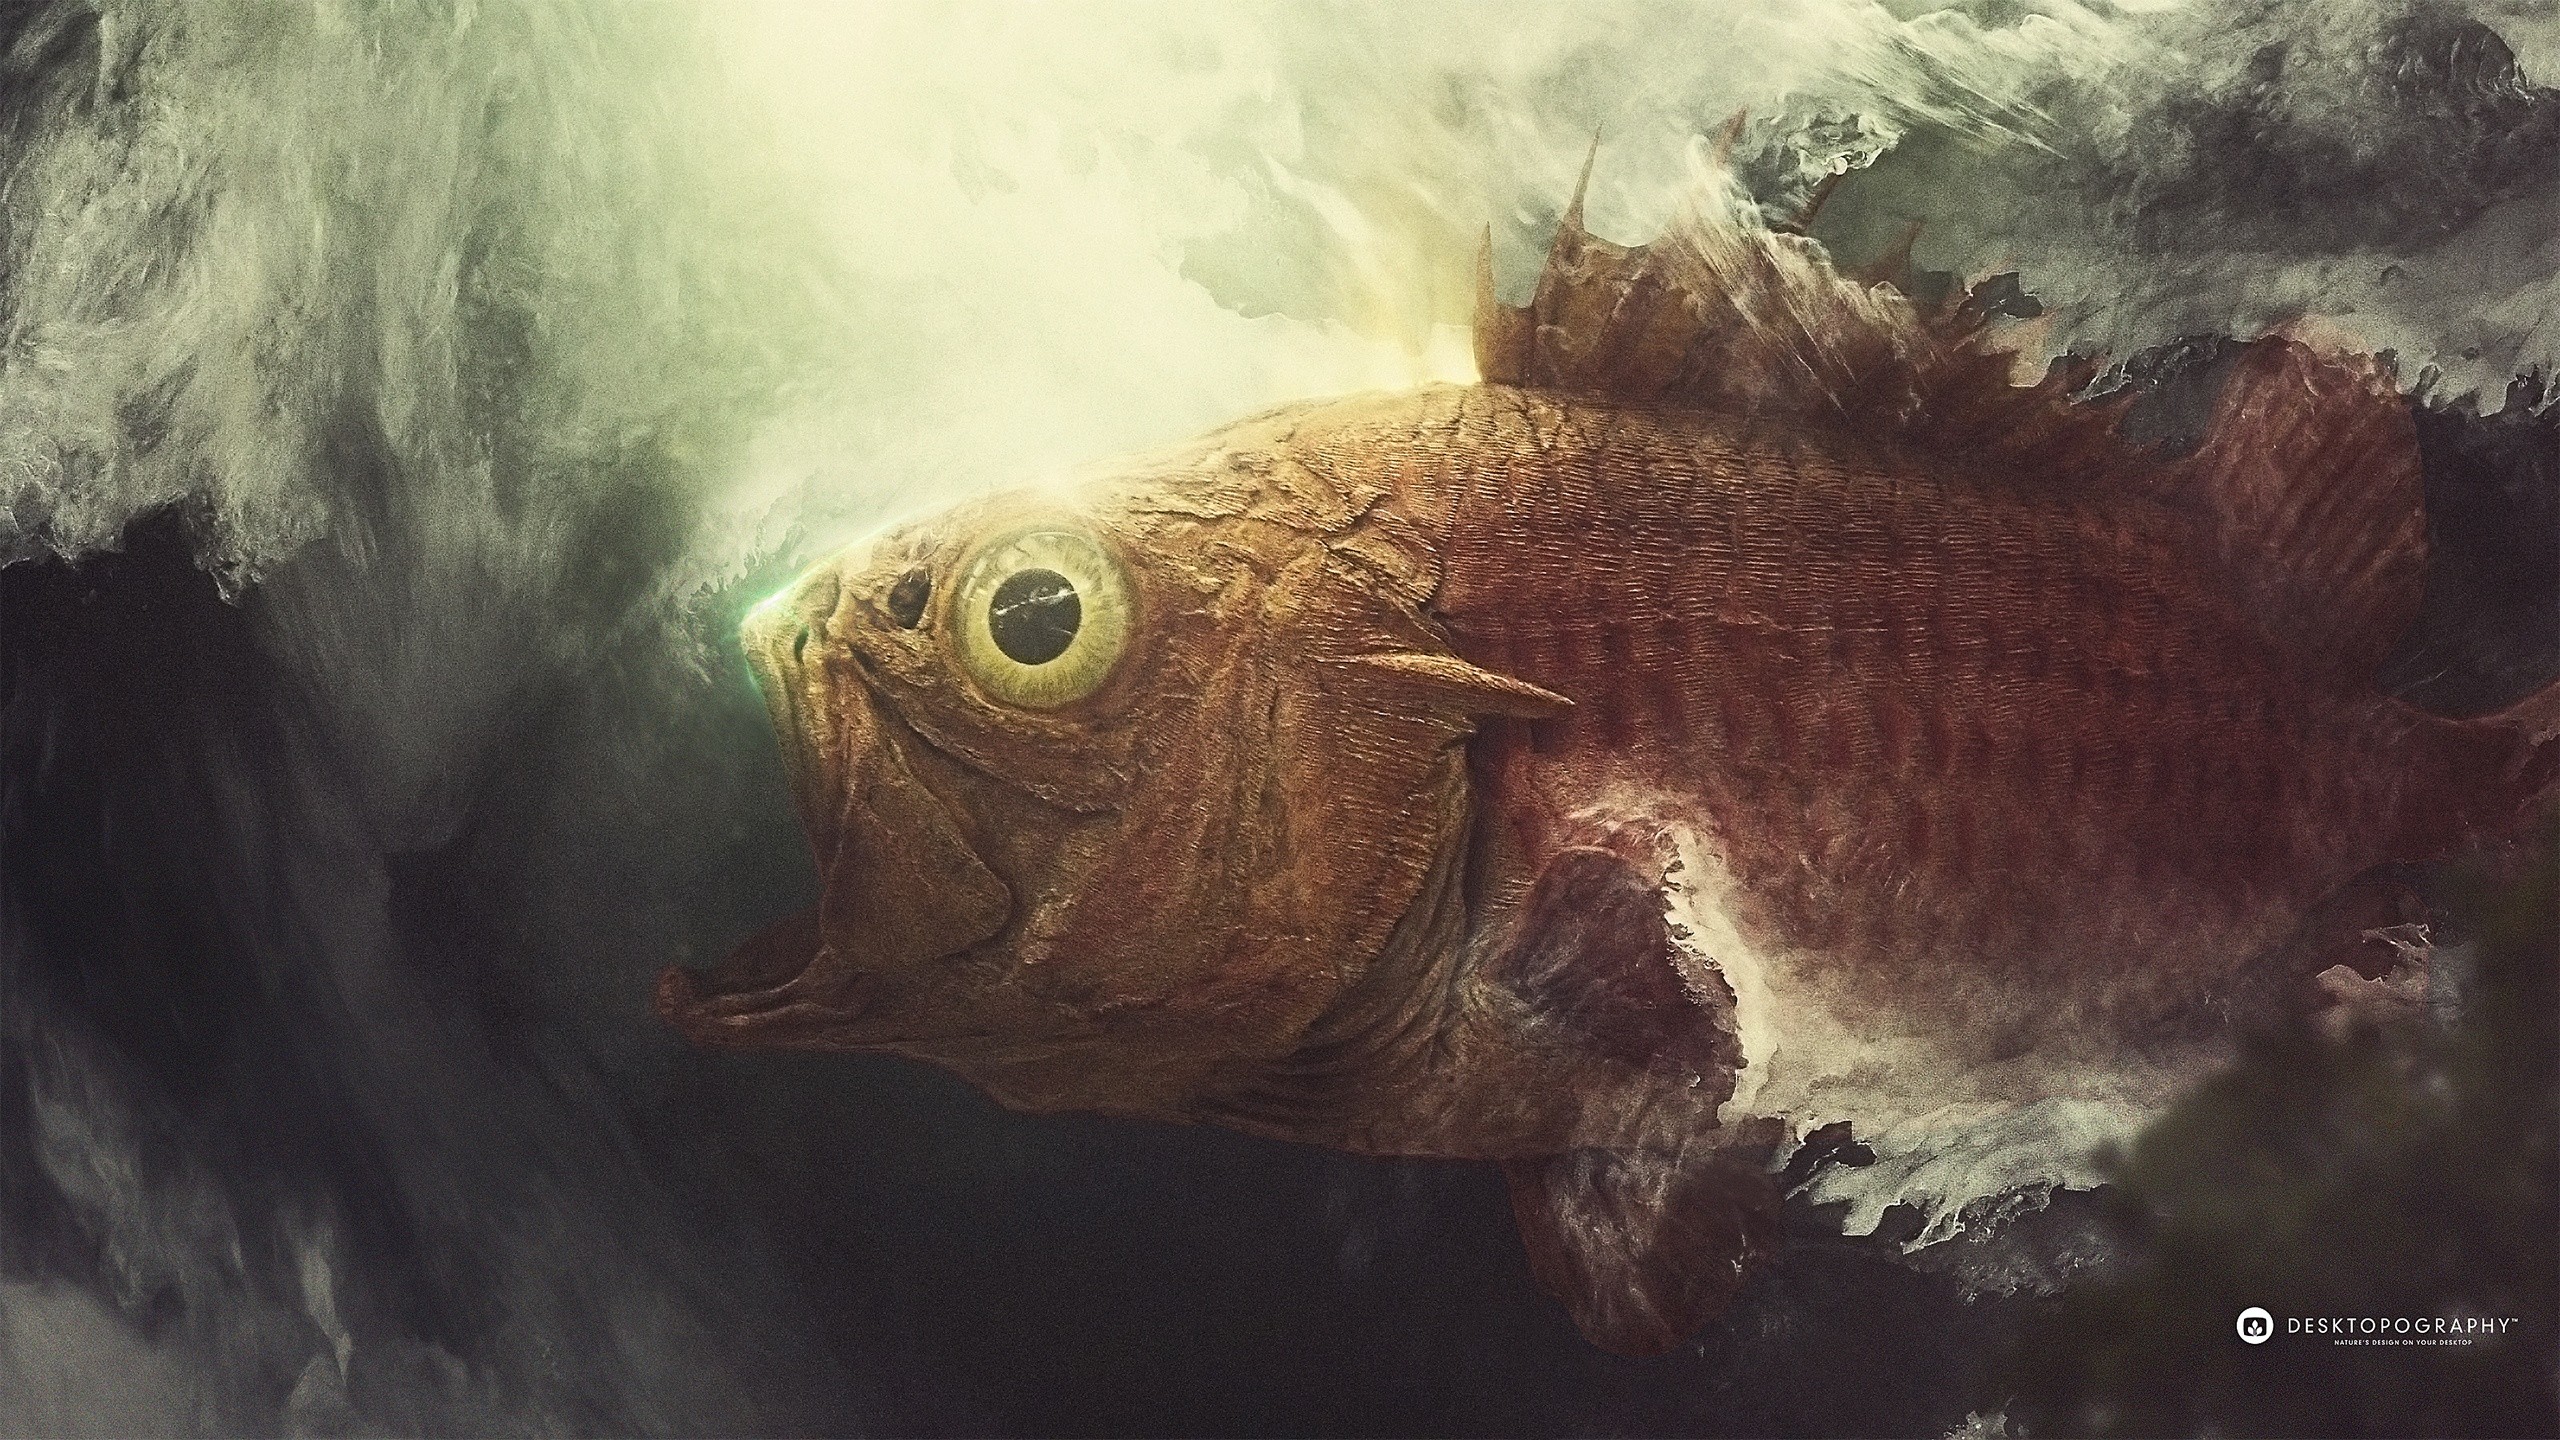 General 2560x1440 artwork fish animals Desktopography digital art watermarked closeup